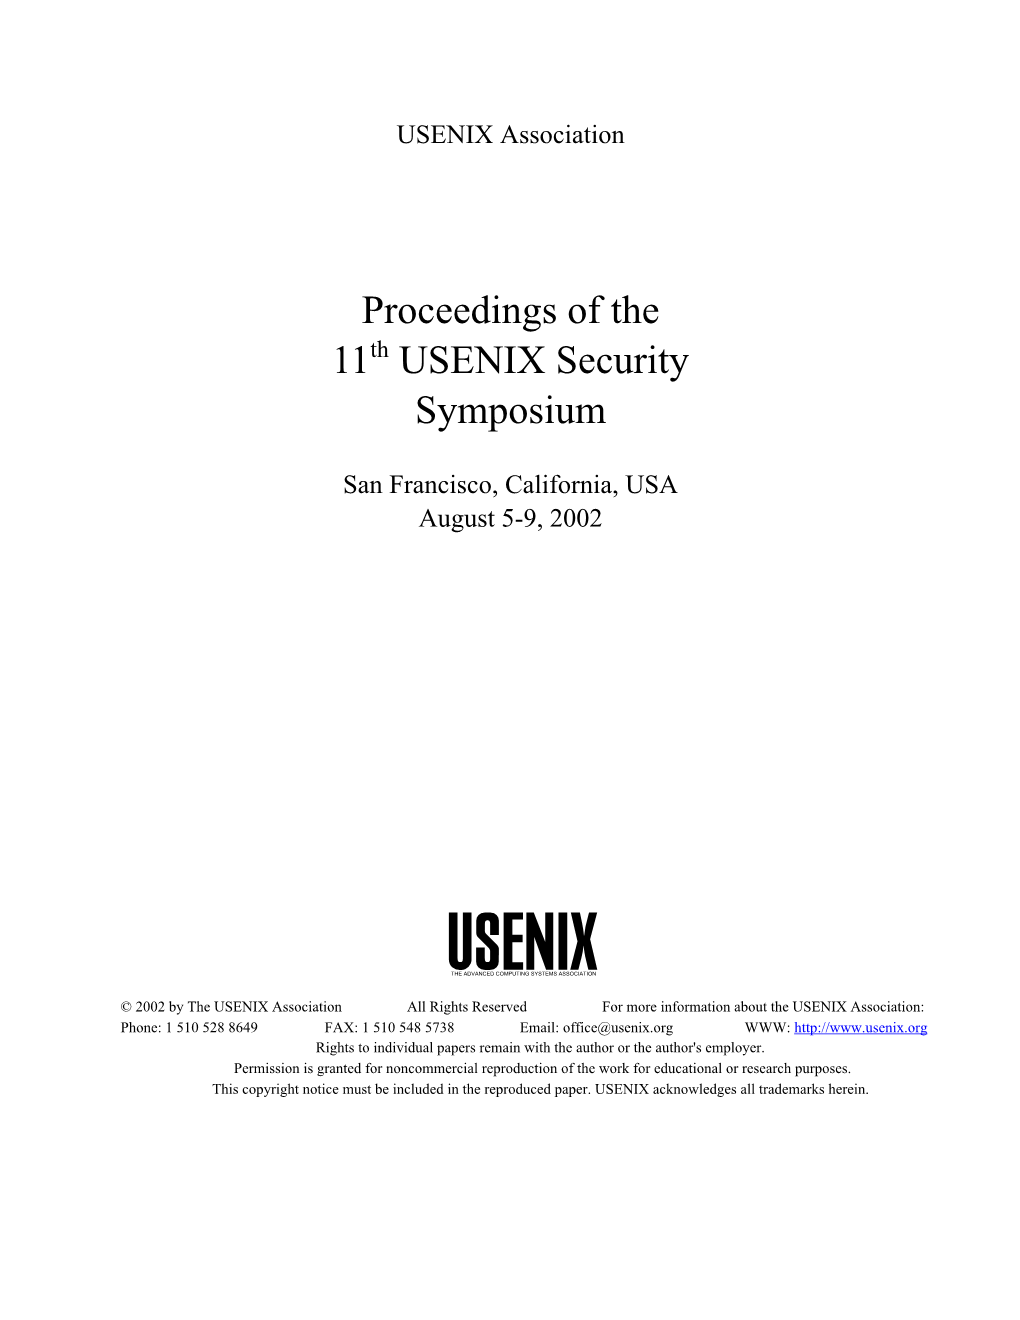 Proceedings of the 11 USENIX Security Symposium